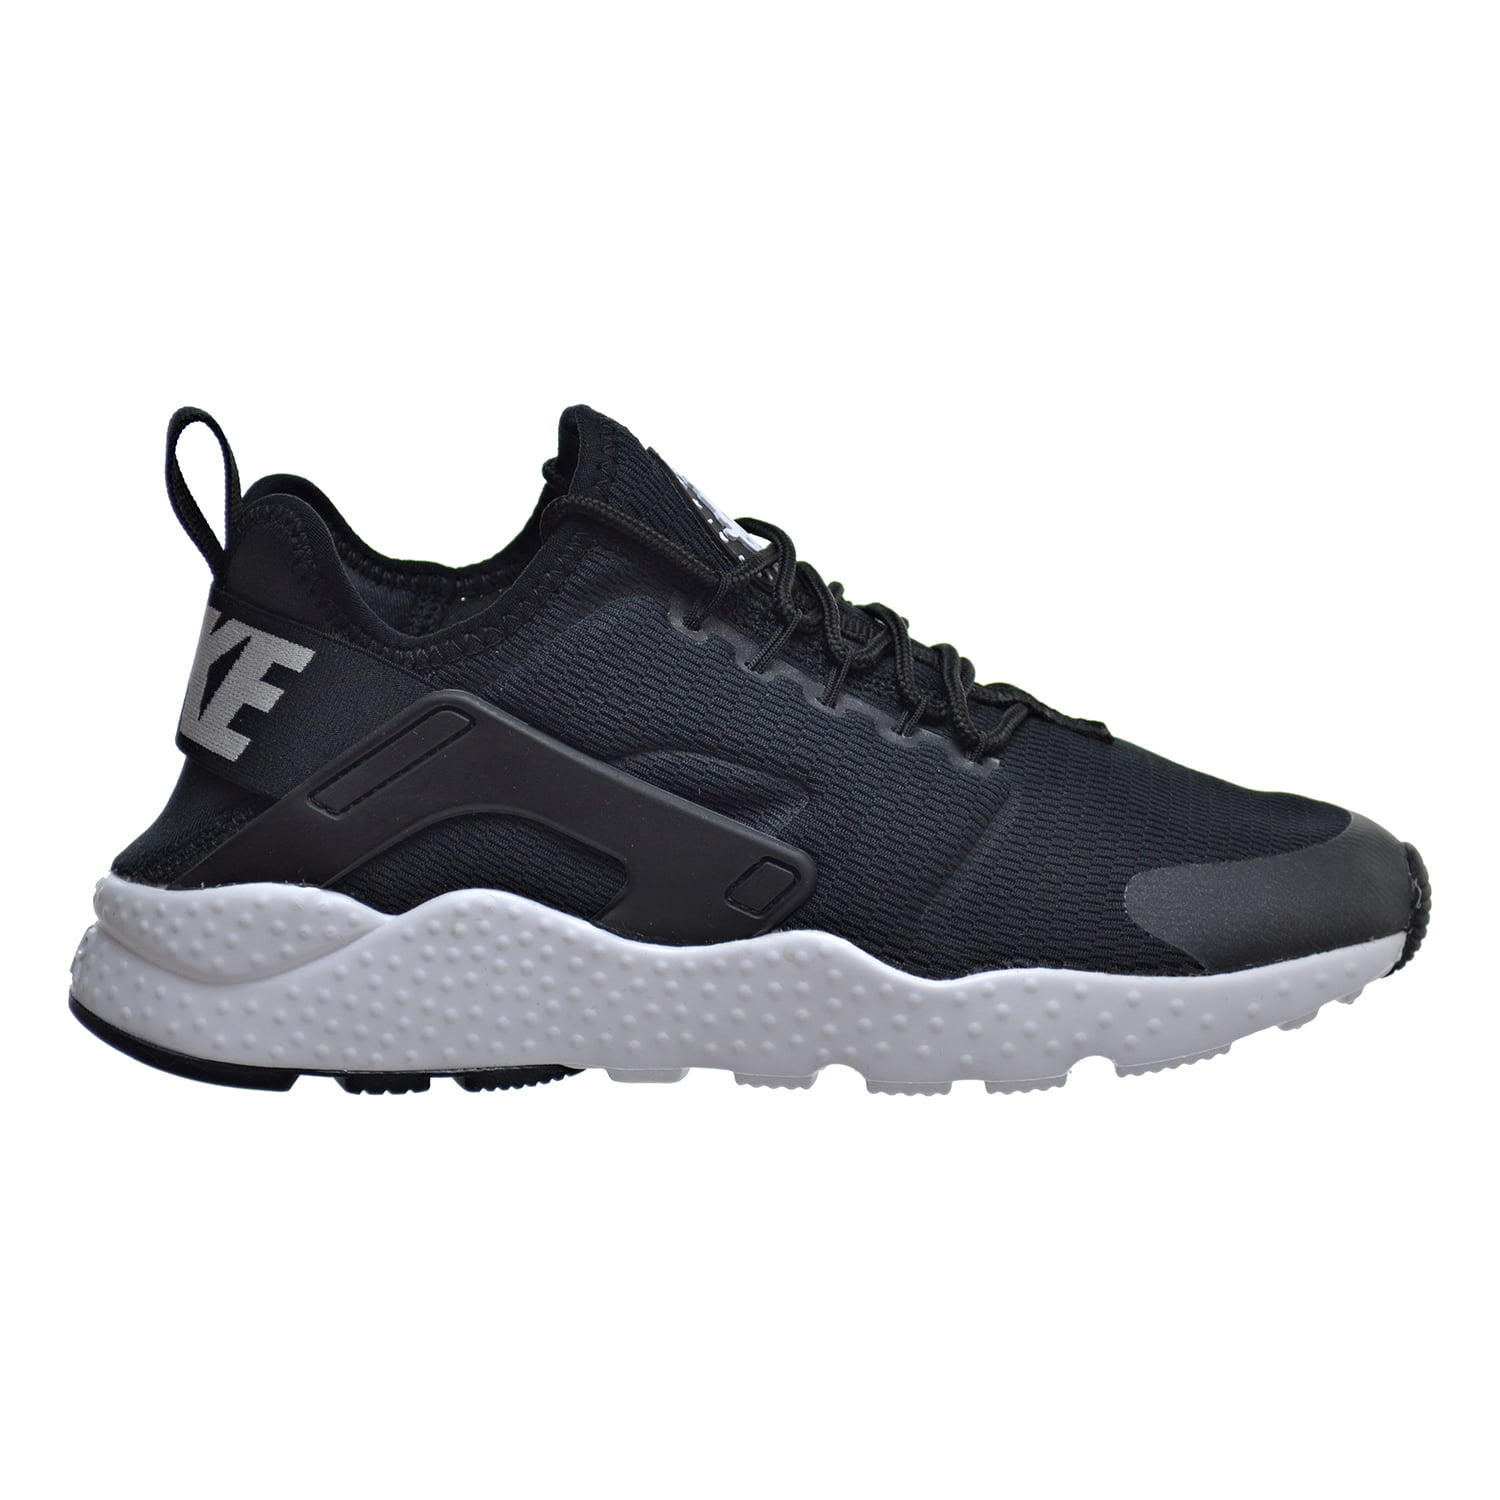 Advance sale Persuasion Perceive Nike Air Huarache Run Ultra Women's Shoes Black/White 819151-001 -  Walmart.com